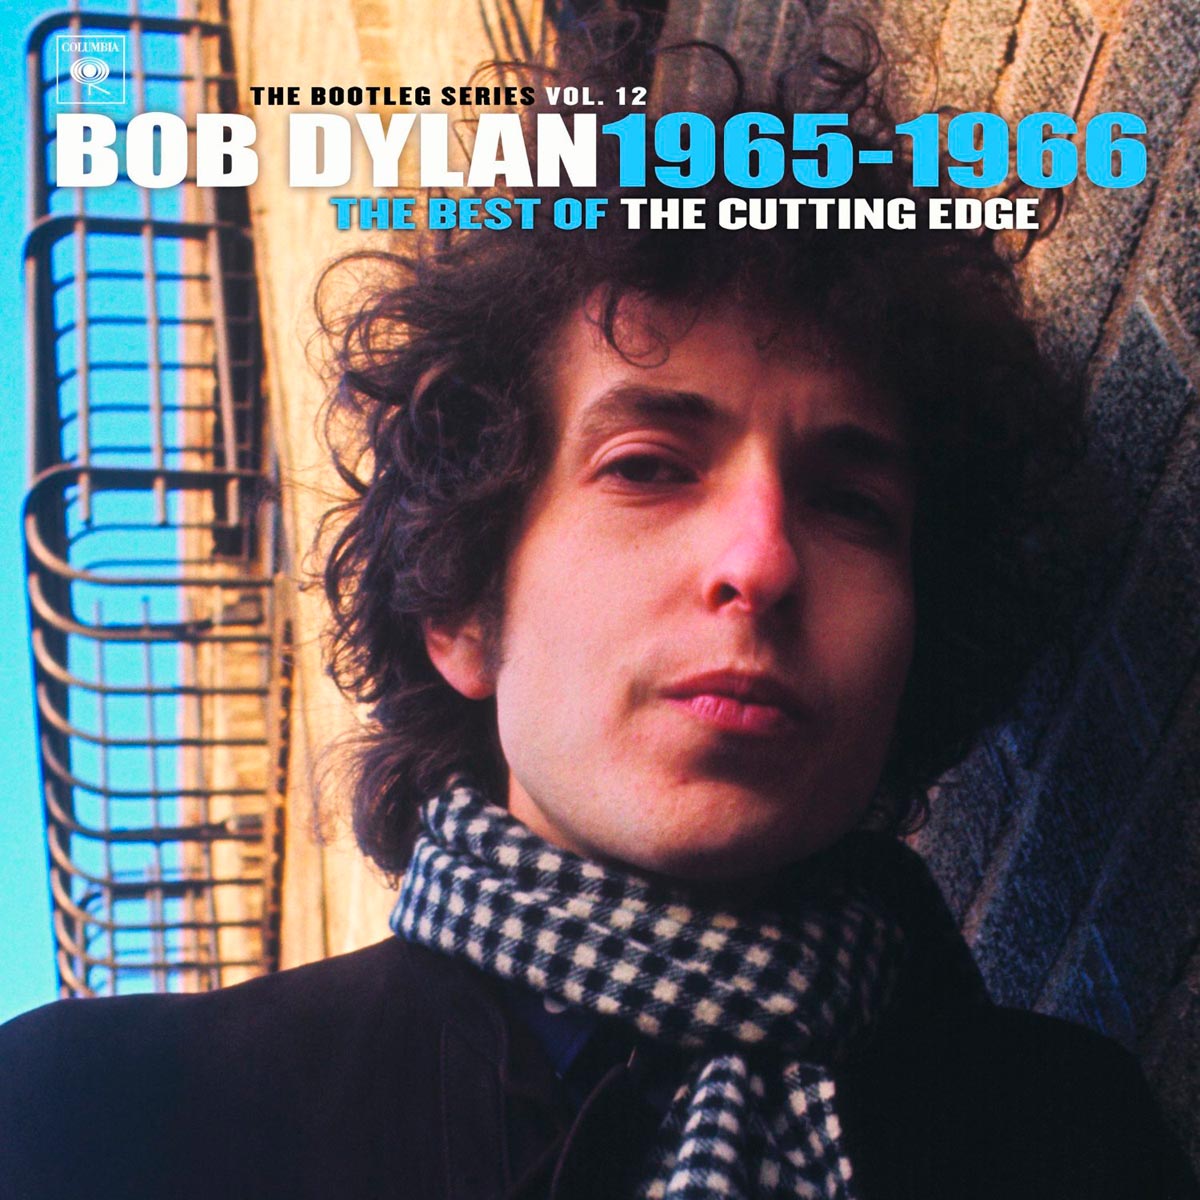 Bob Dylan: The cutting edge 1965-1966: The bootleg series Vol. 12, la  portada del disco